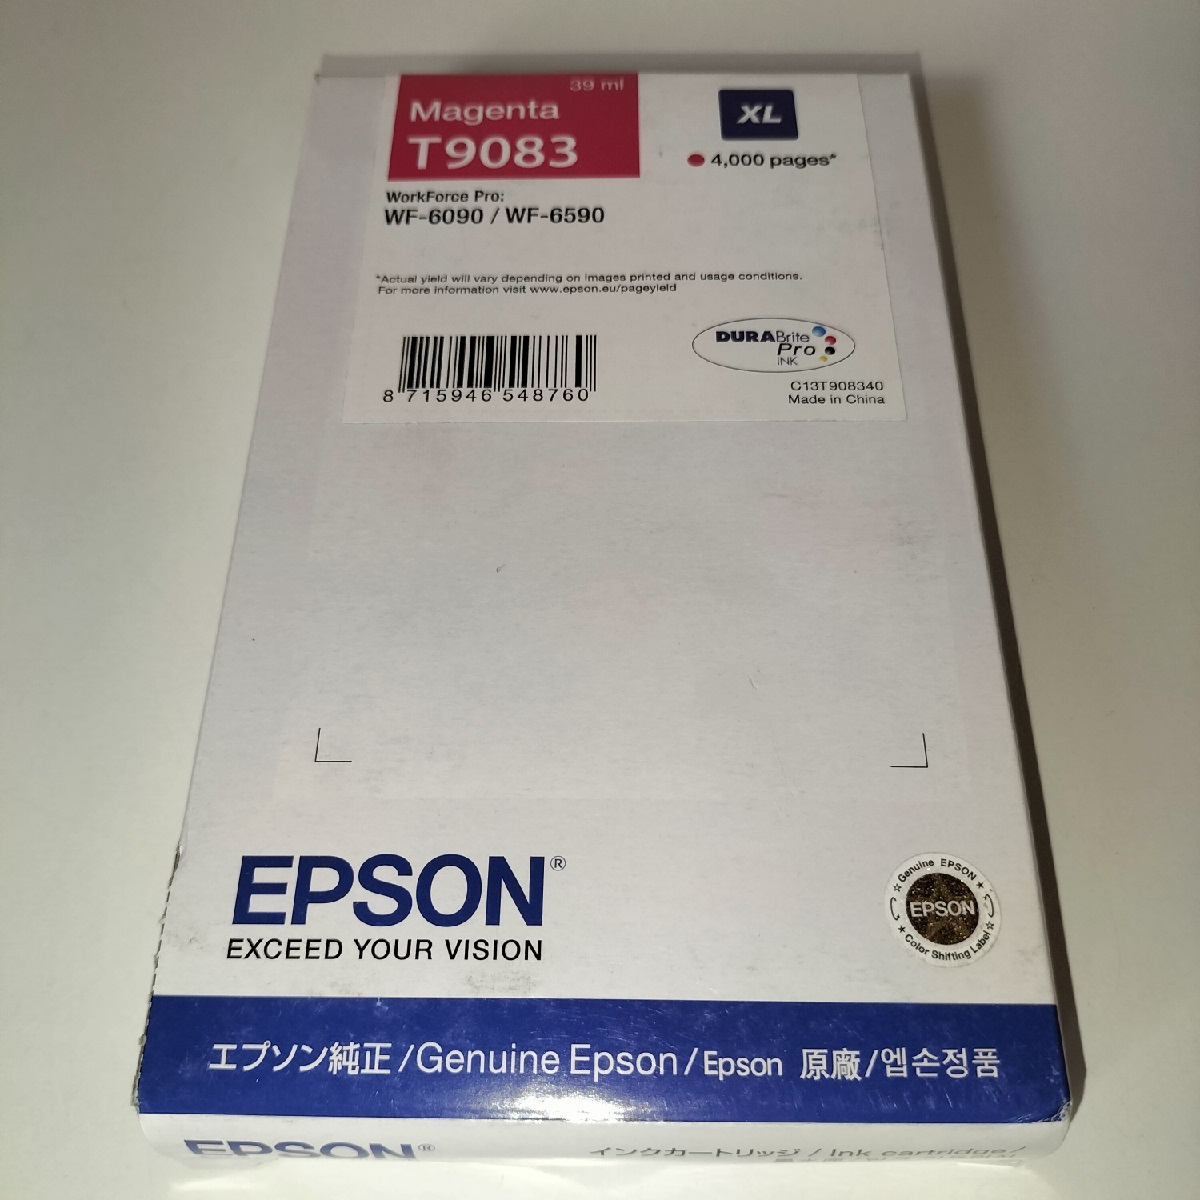 Epson T9083 XL CT13T908340 Tinta original magenta para WorkForce Pro WF-6090 / WF-6590